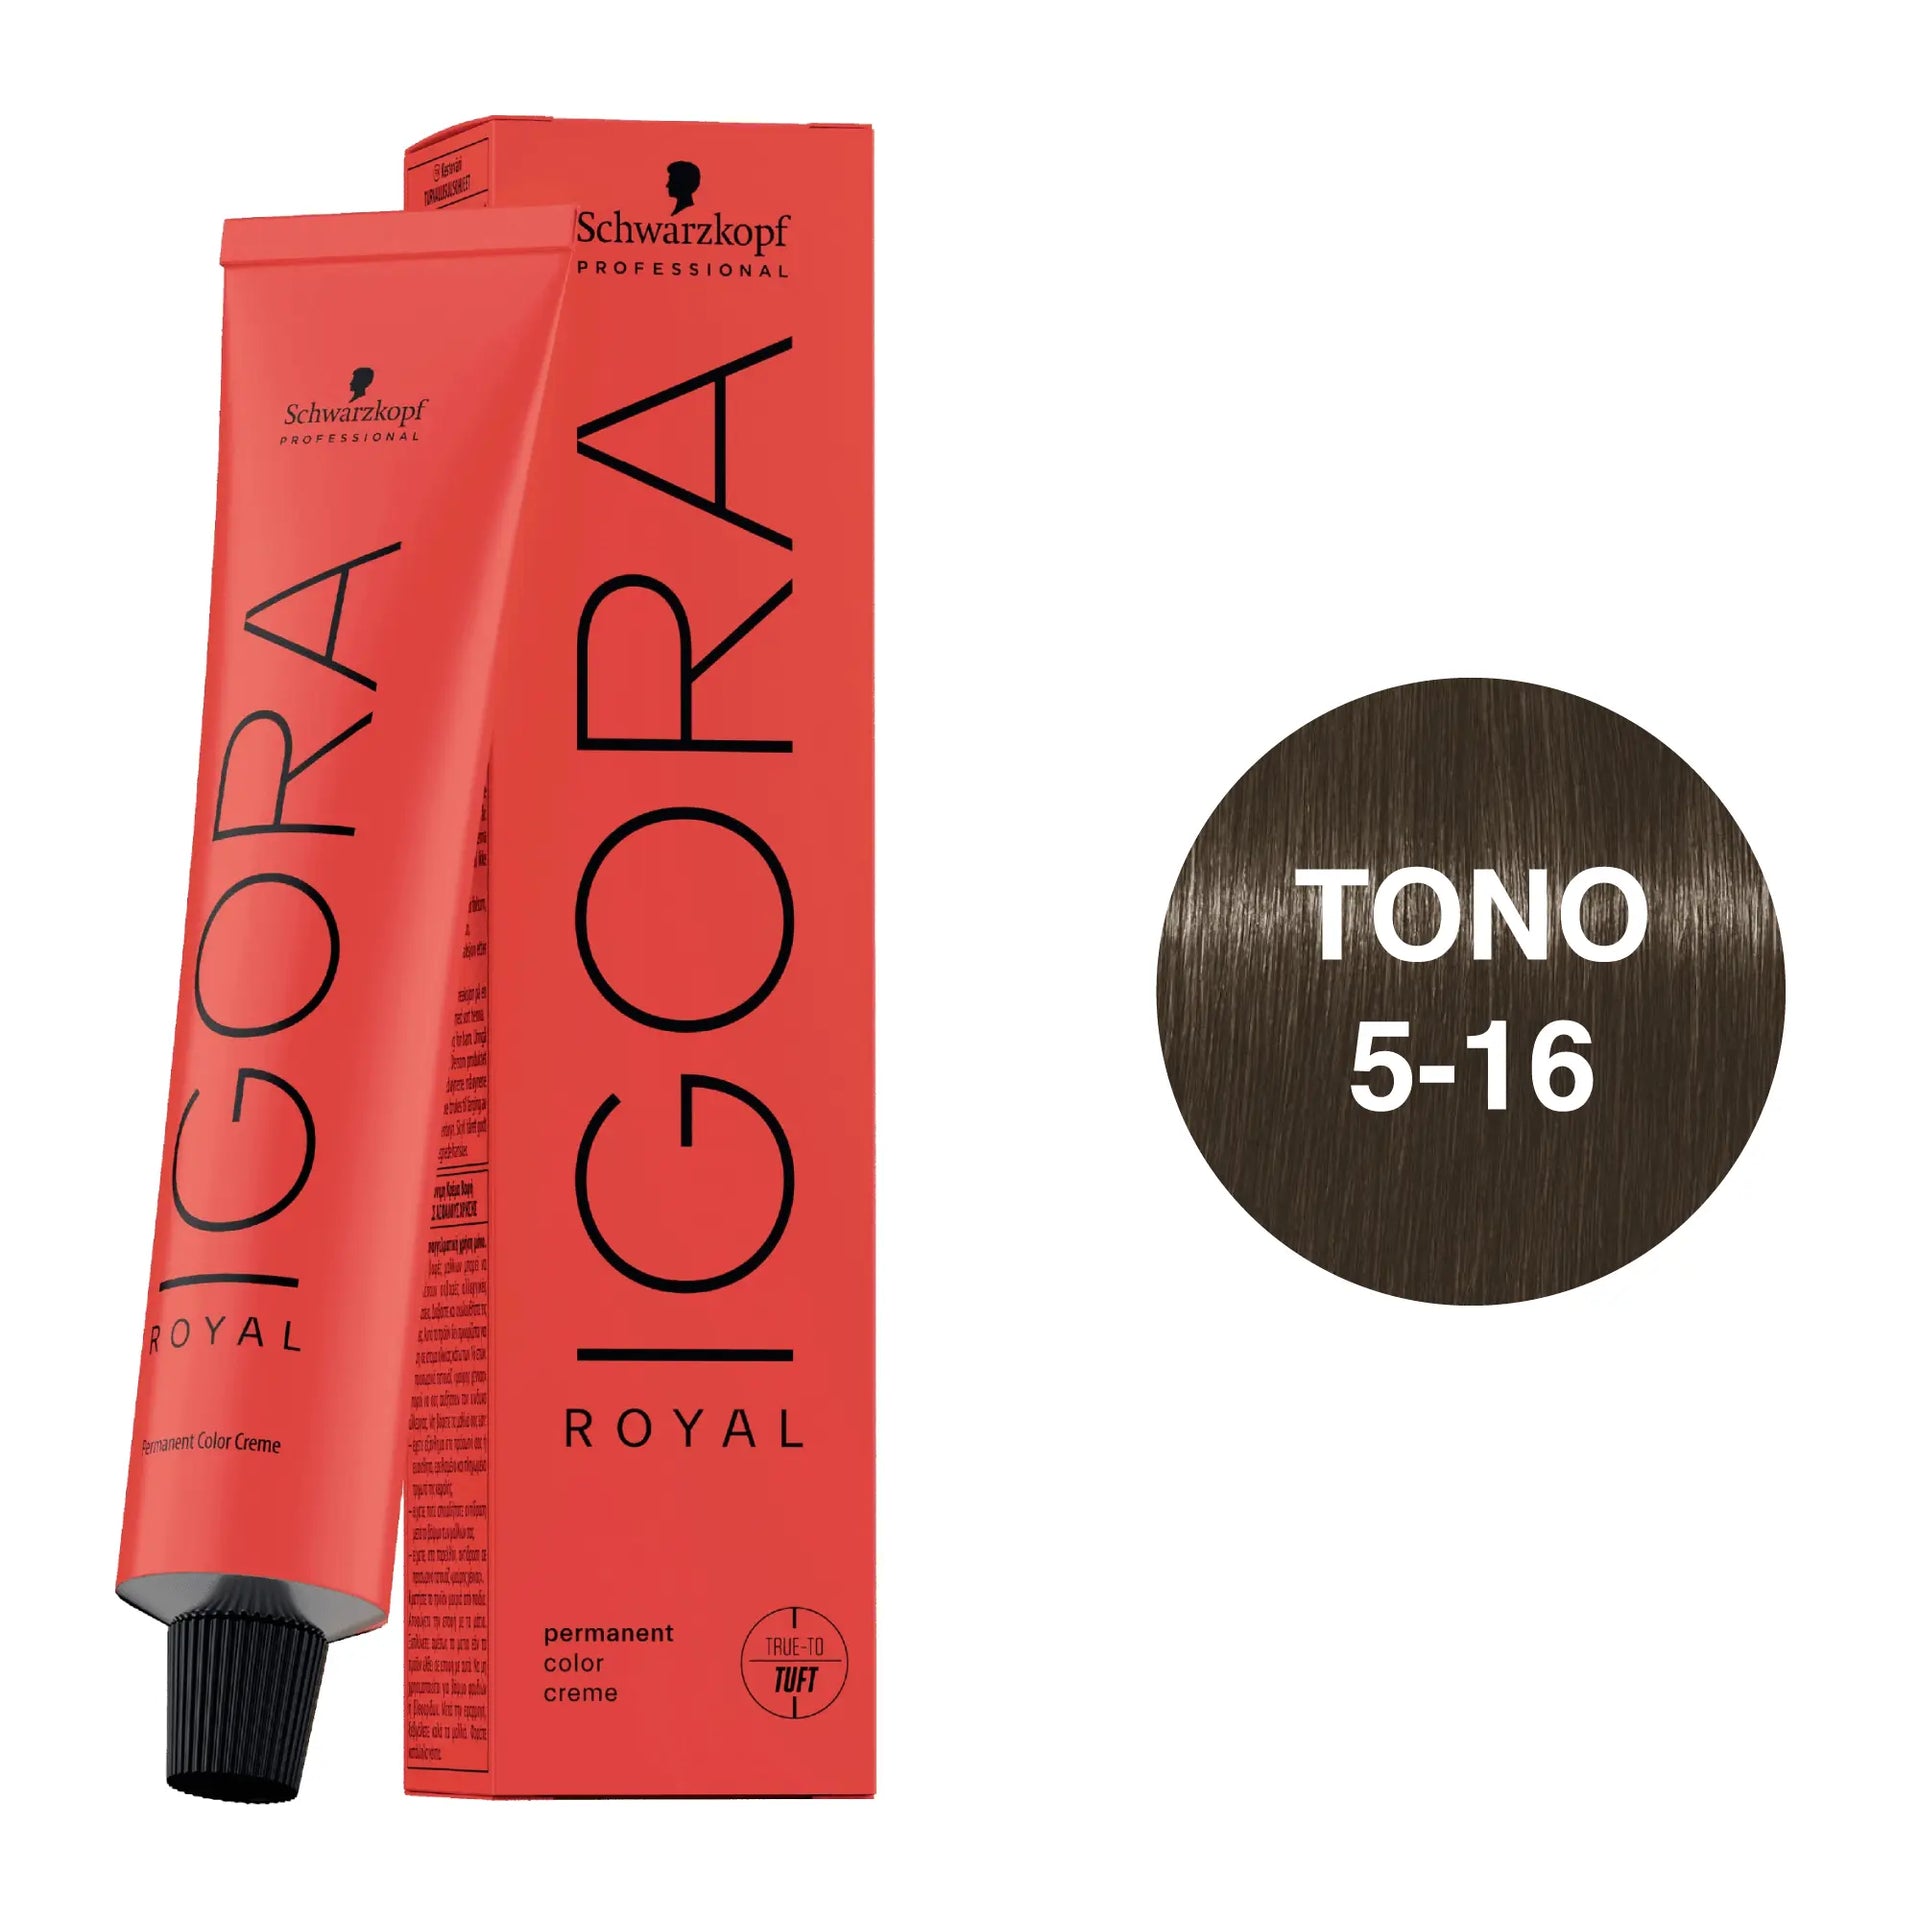 SCHWARZKOPF Igora Royal Tono 5-6 Castaño Claro Chocolate 60mL